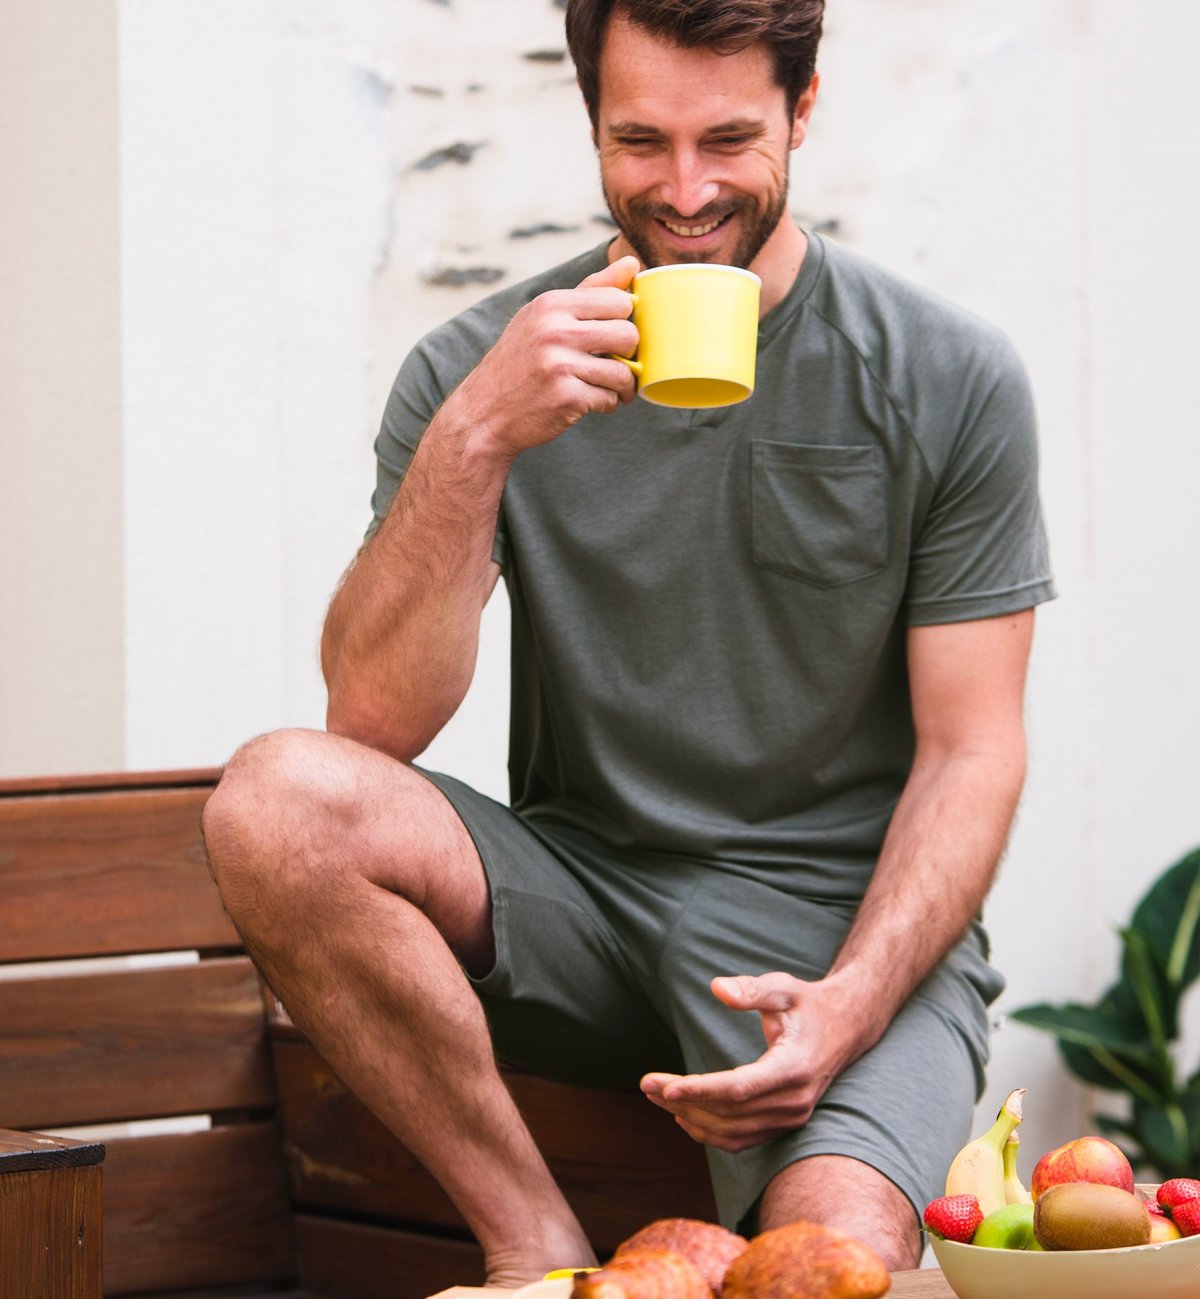 Organic Cotton and TENCEL™ pajama set for men